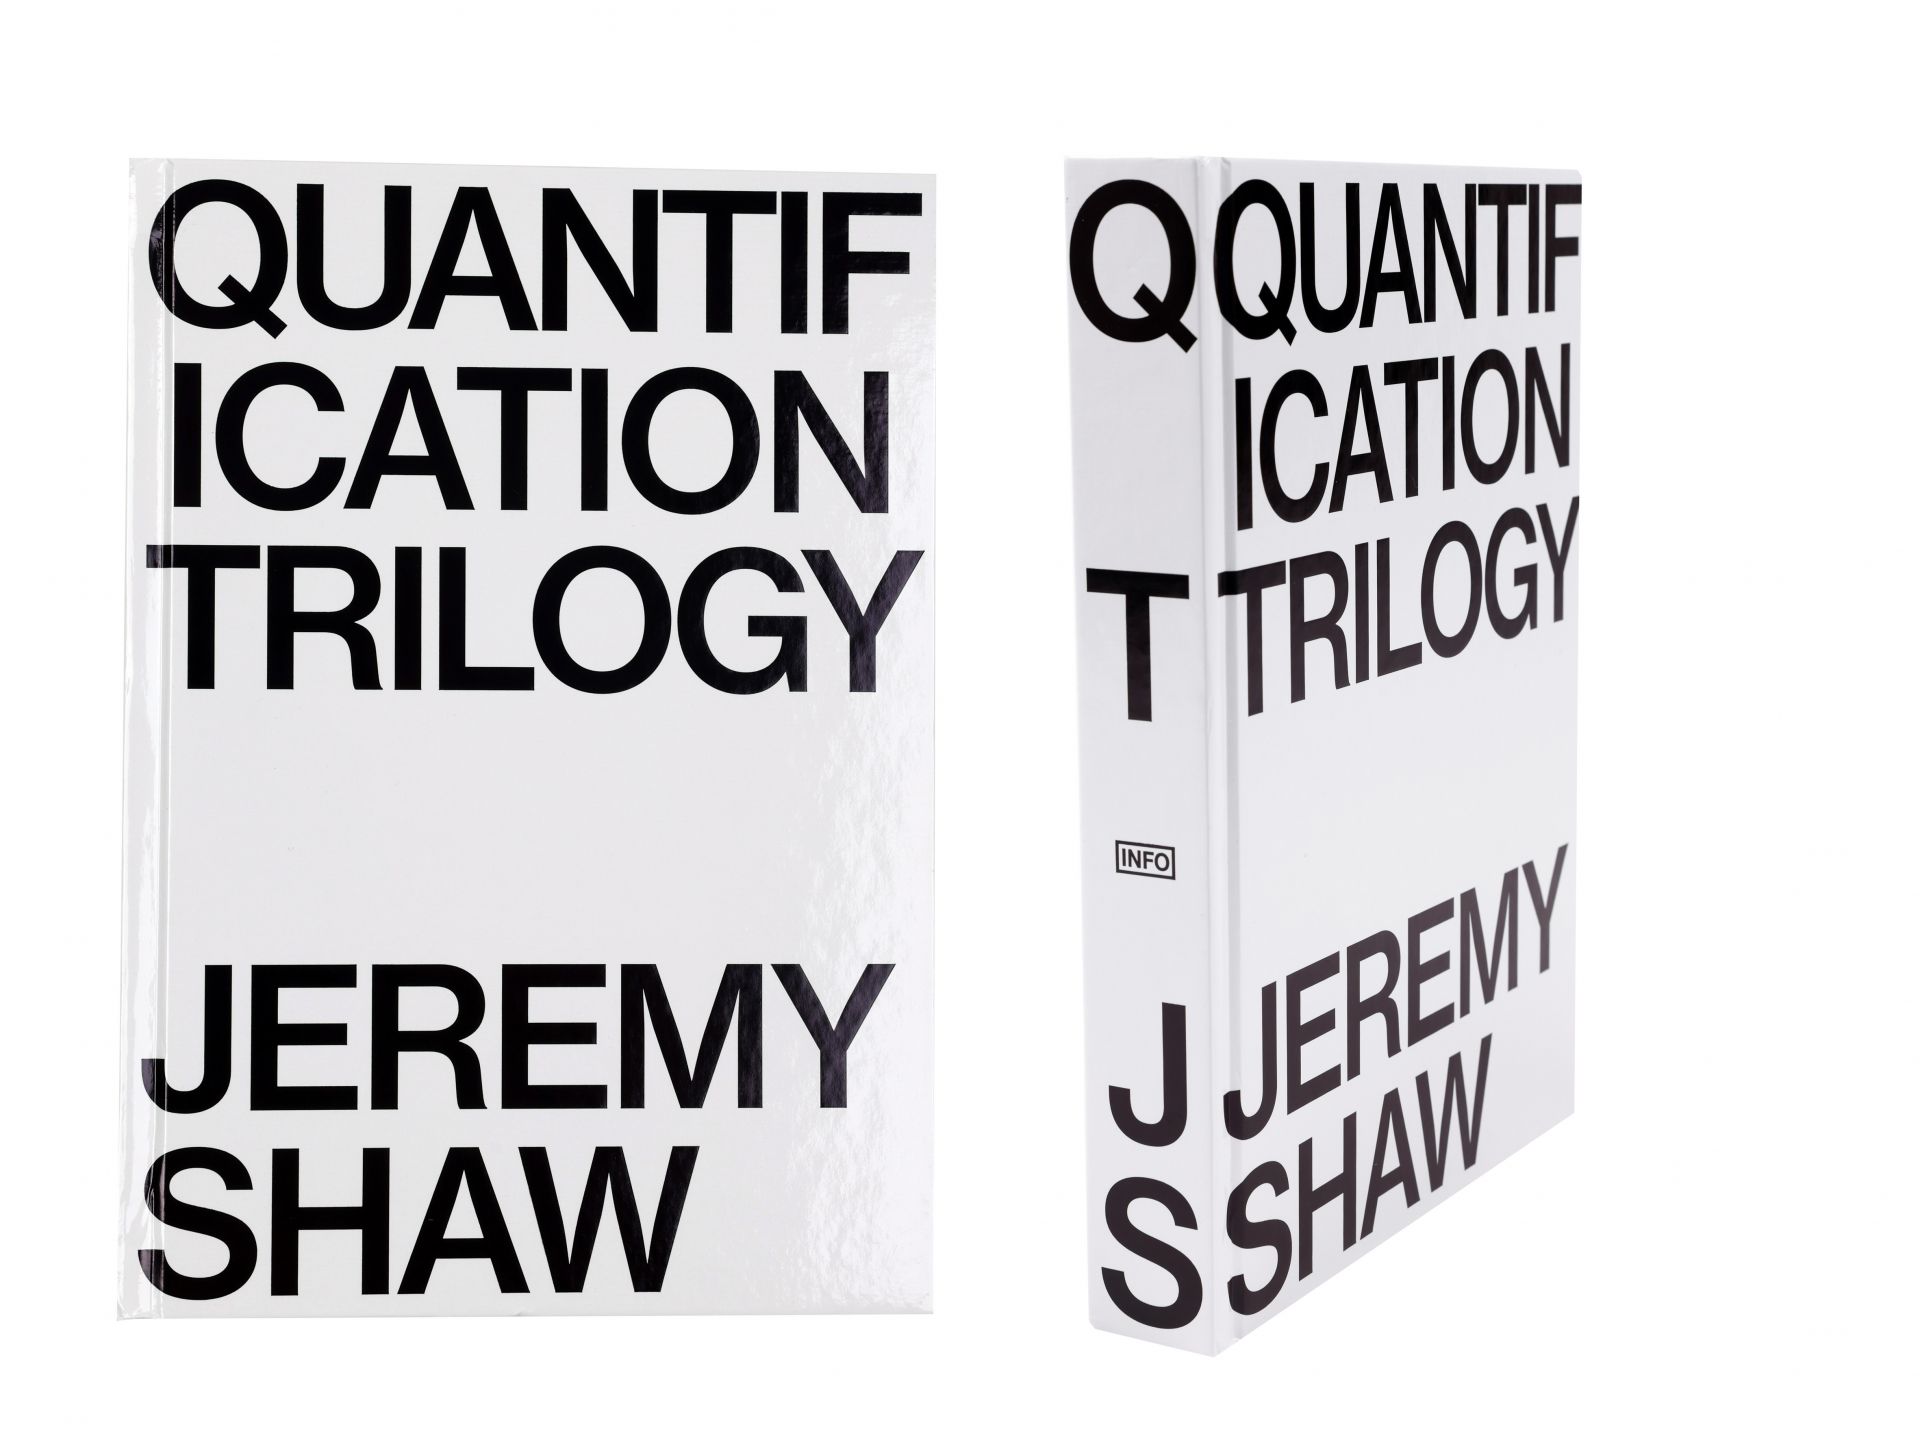 JEREMY SHAW: QUANTIFICATION TRILOGY